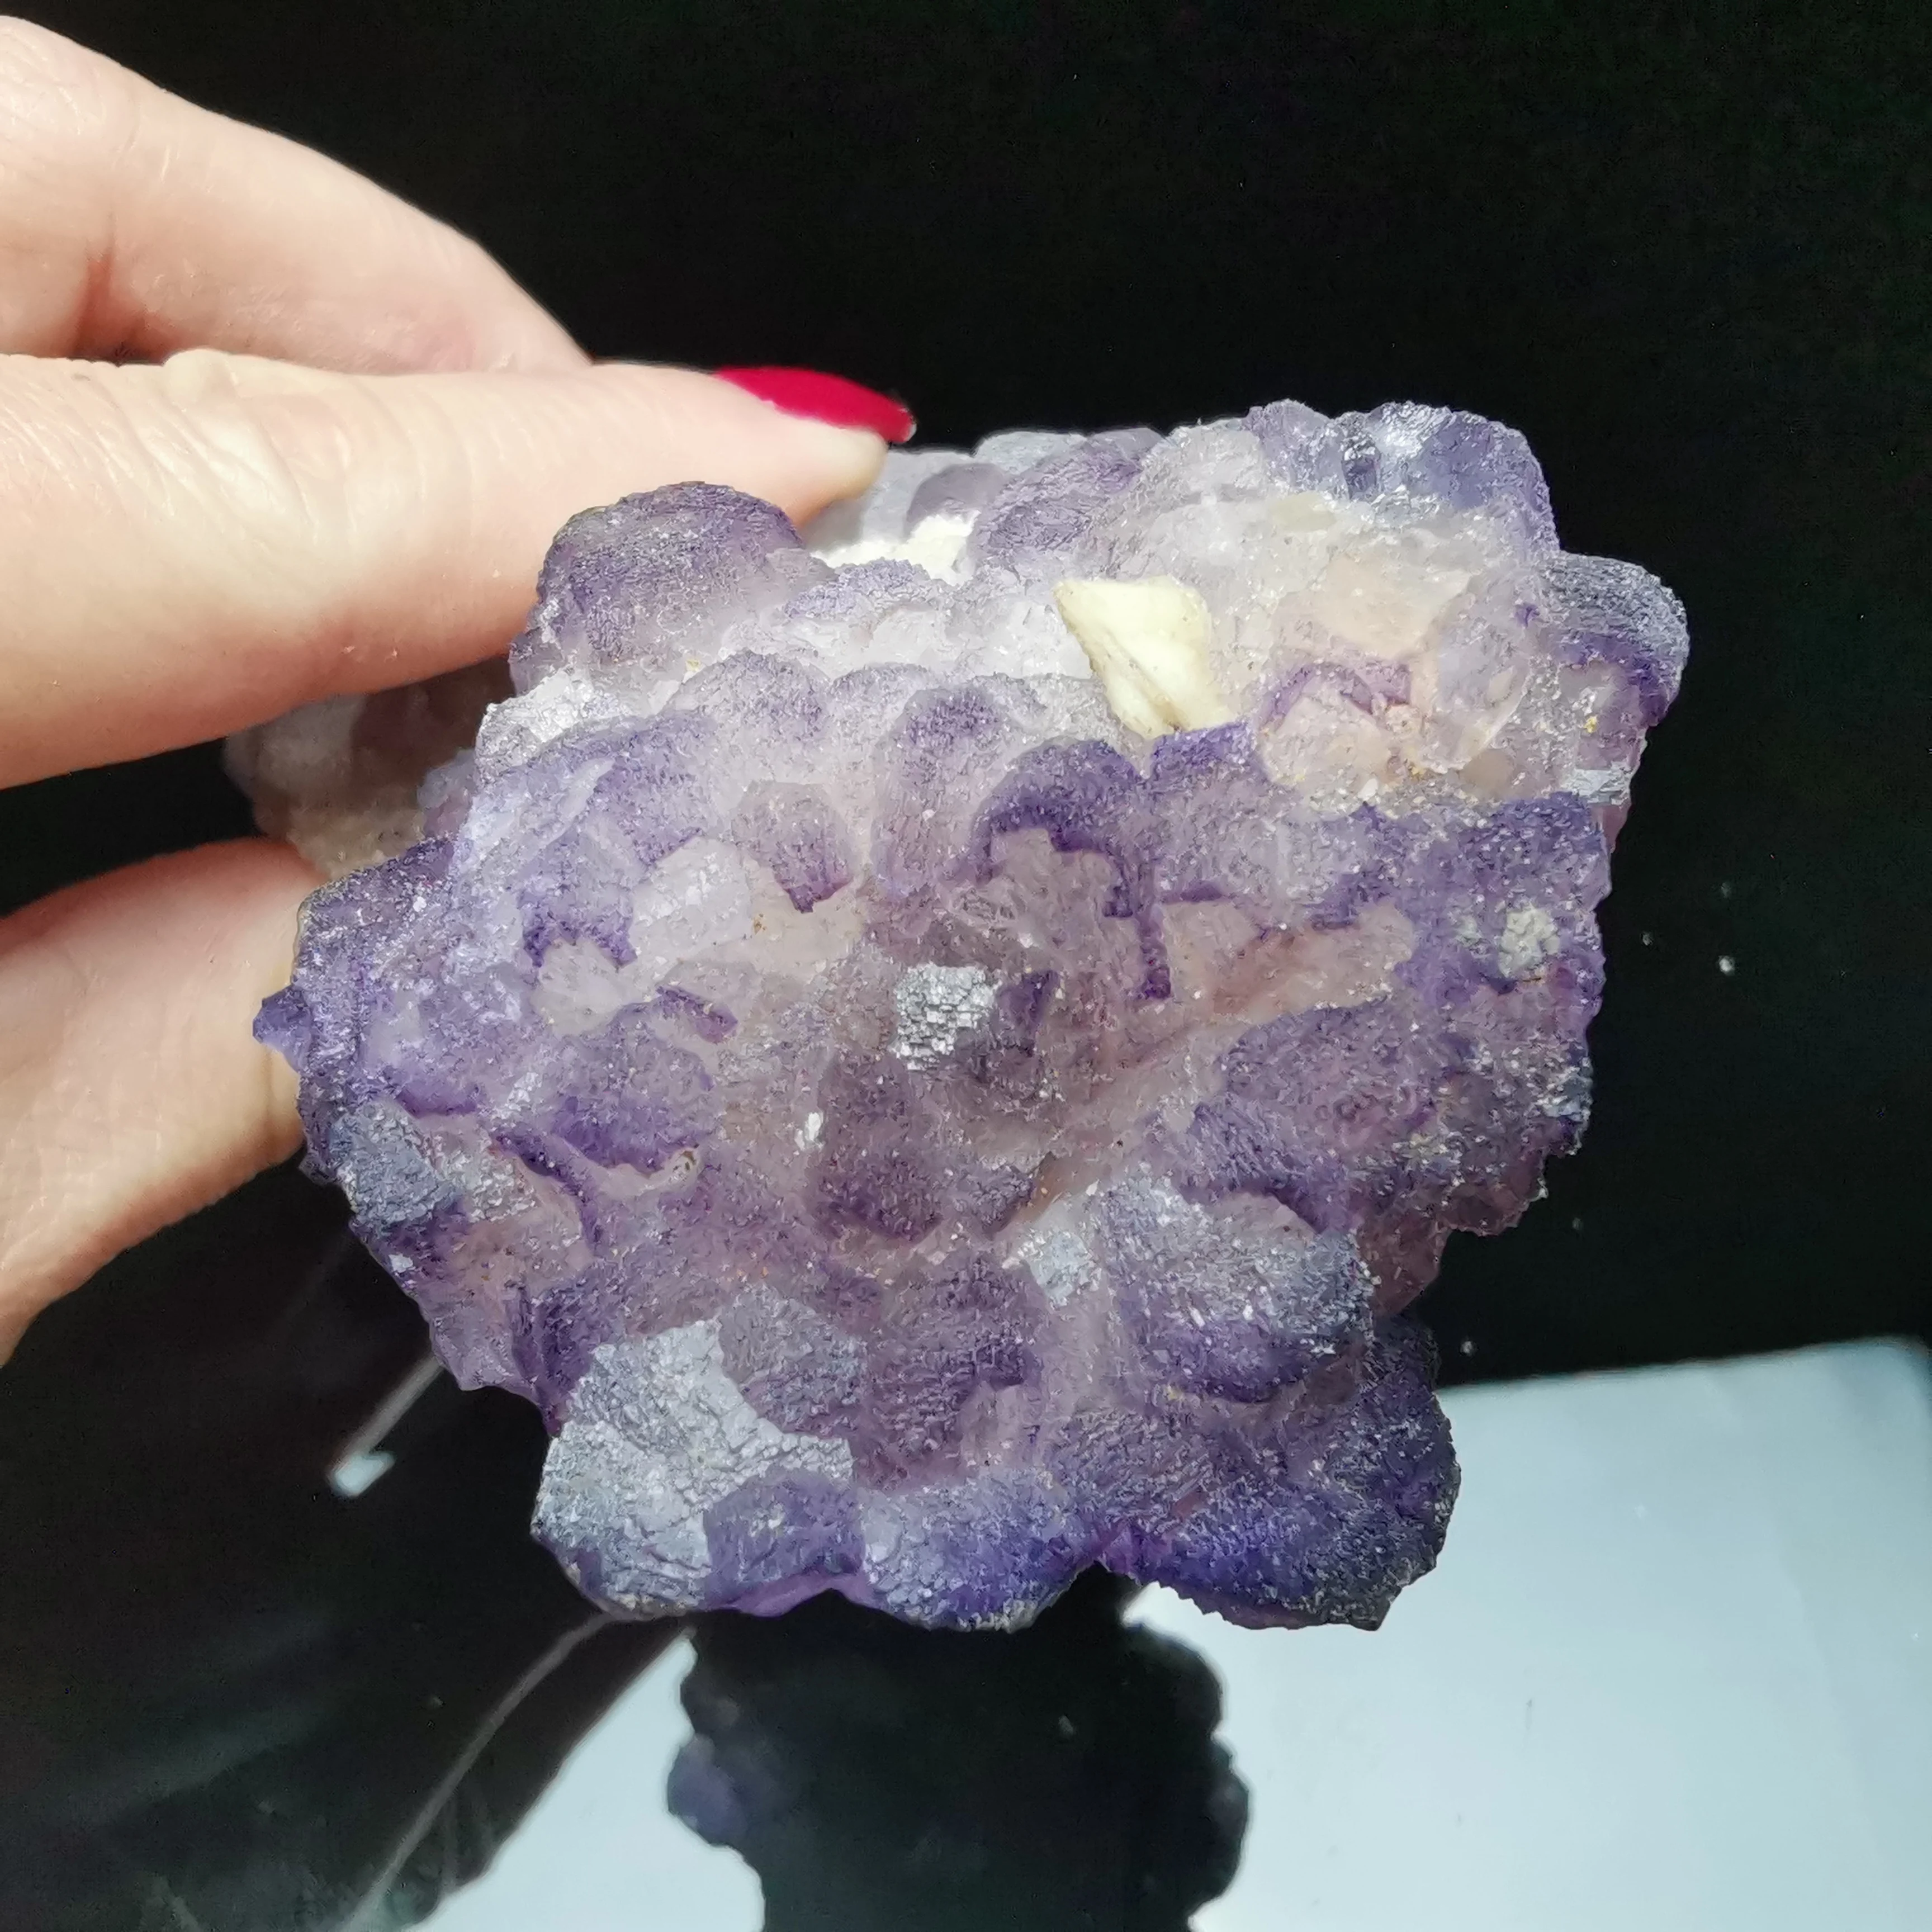 

4.6gNatural rare purple fluorite and quartz mineral specimens healing energy CRYSTAL QUARTZ GEM home decoration collection